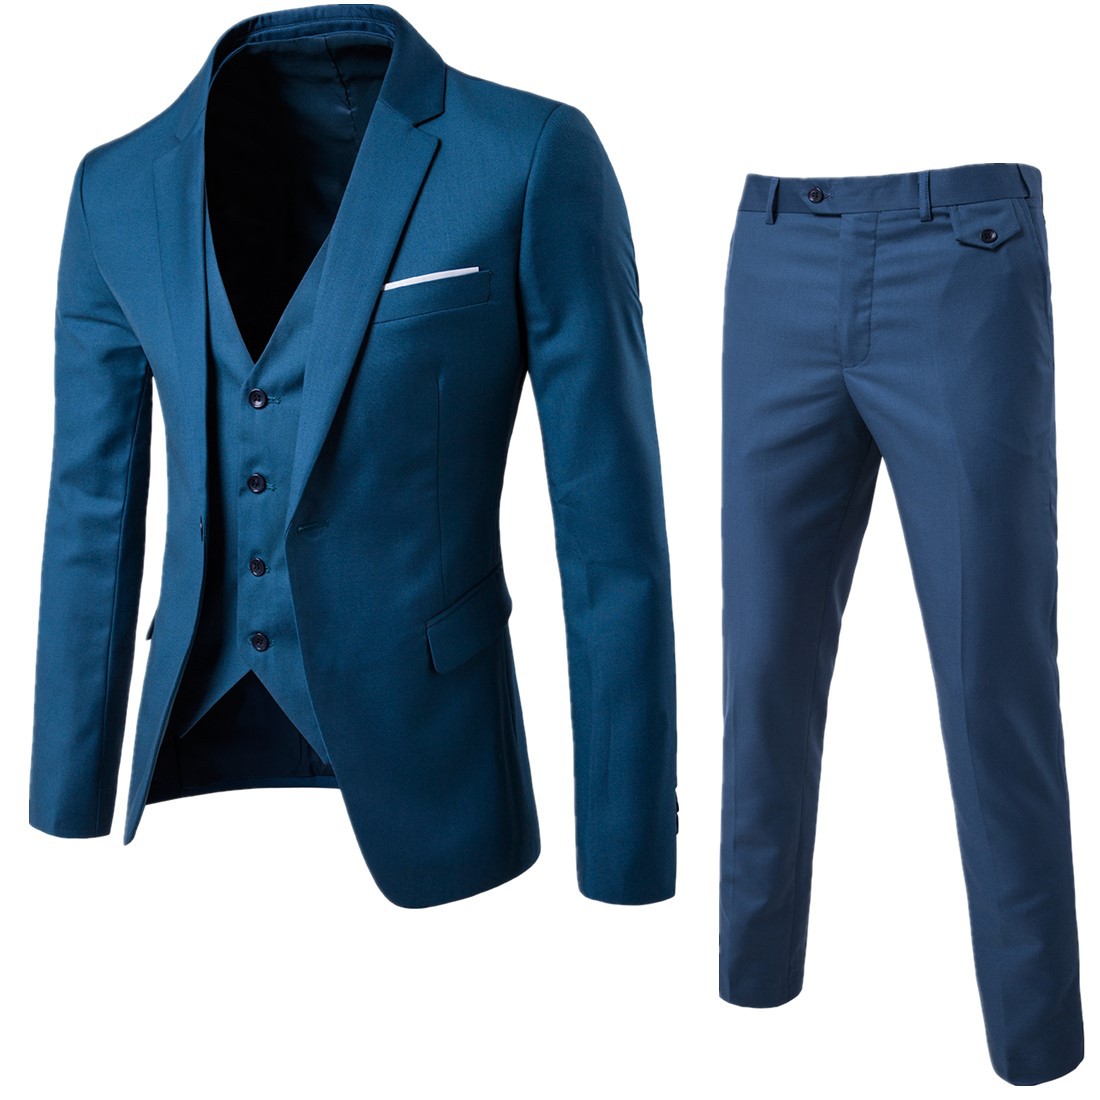 Suit men's suit British style lattice spring 2020 new three piece suit small suit men's handsome and slim suit